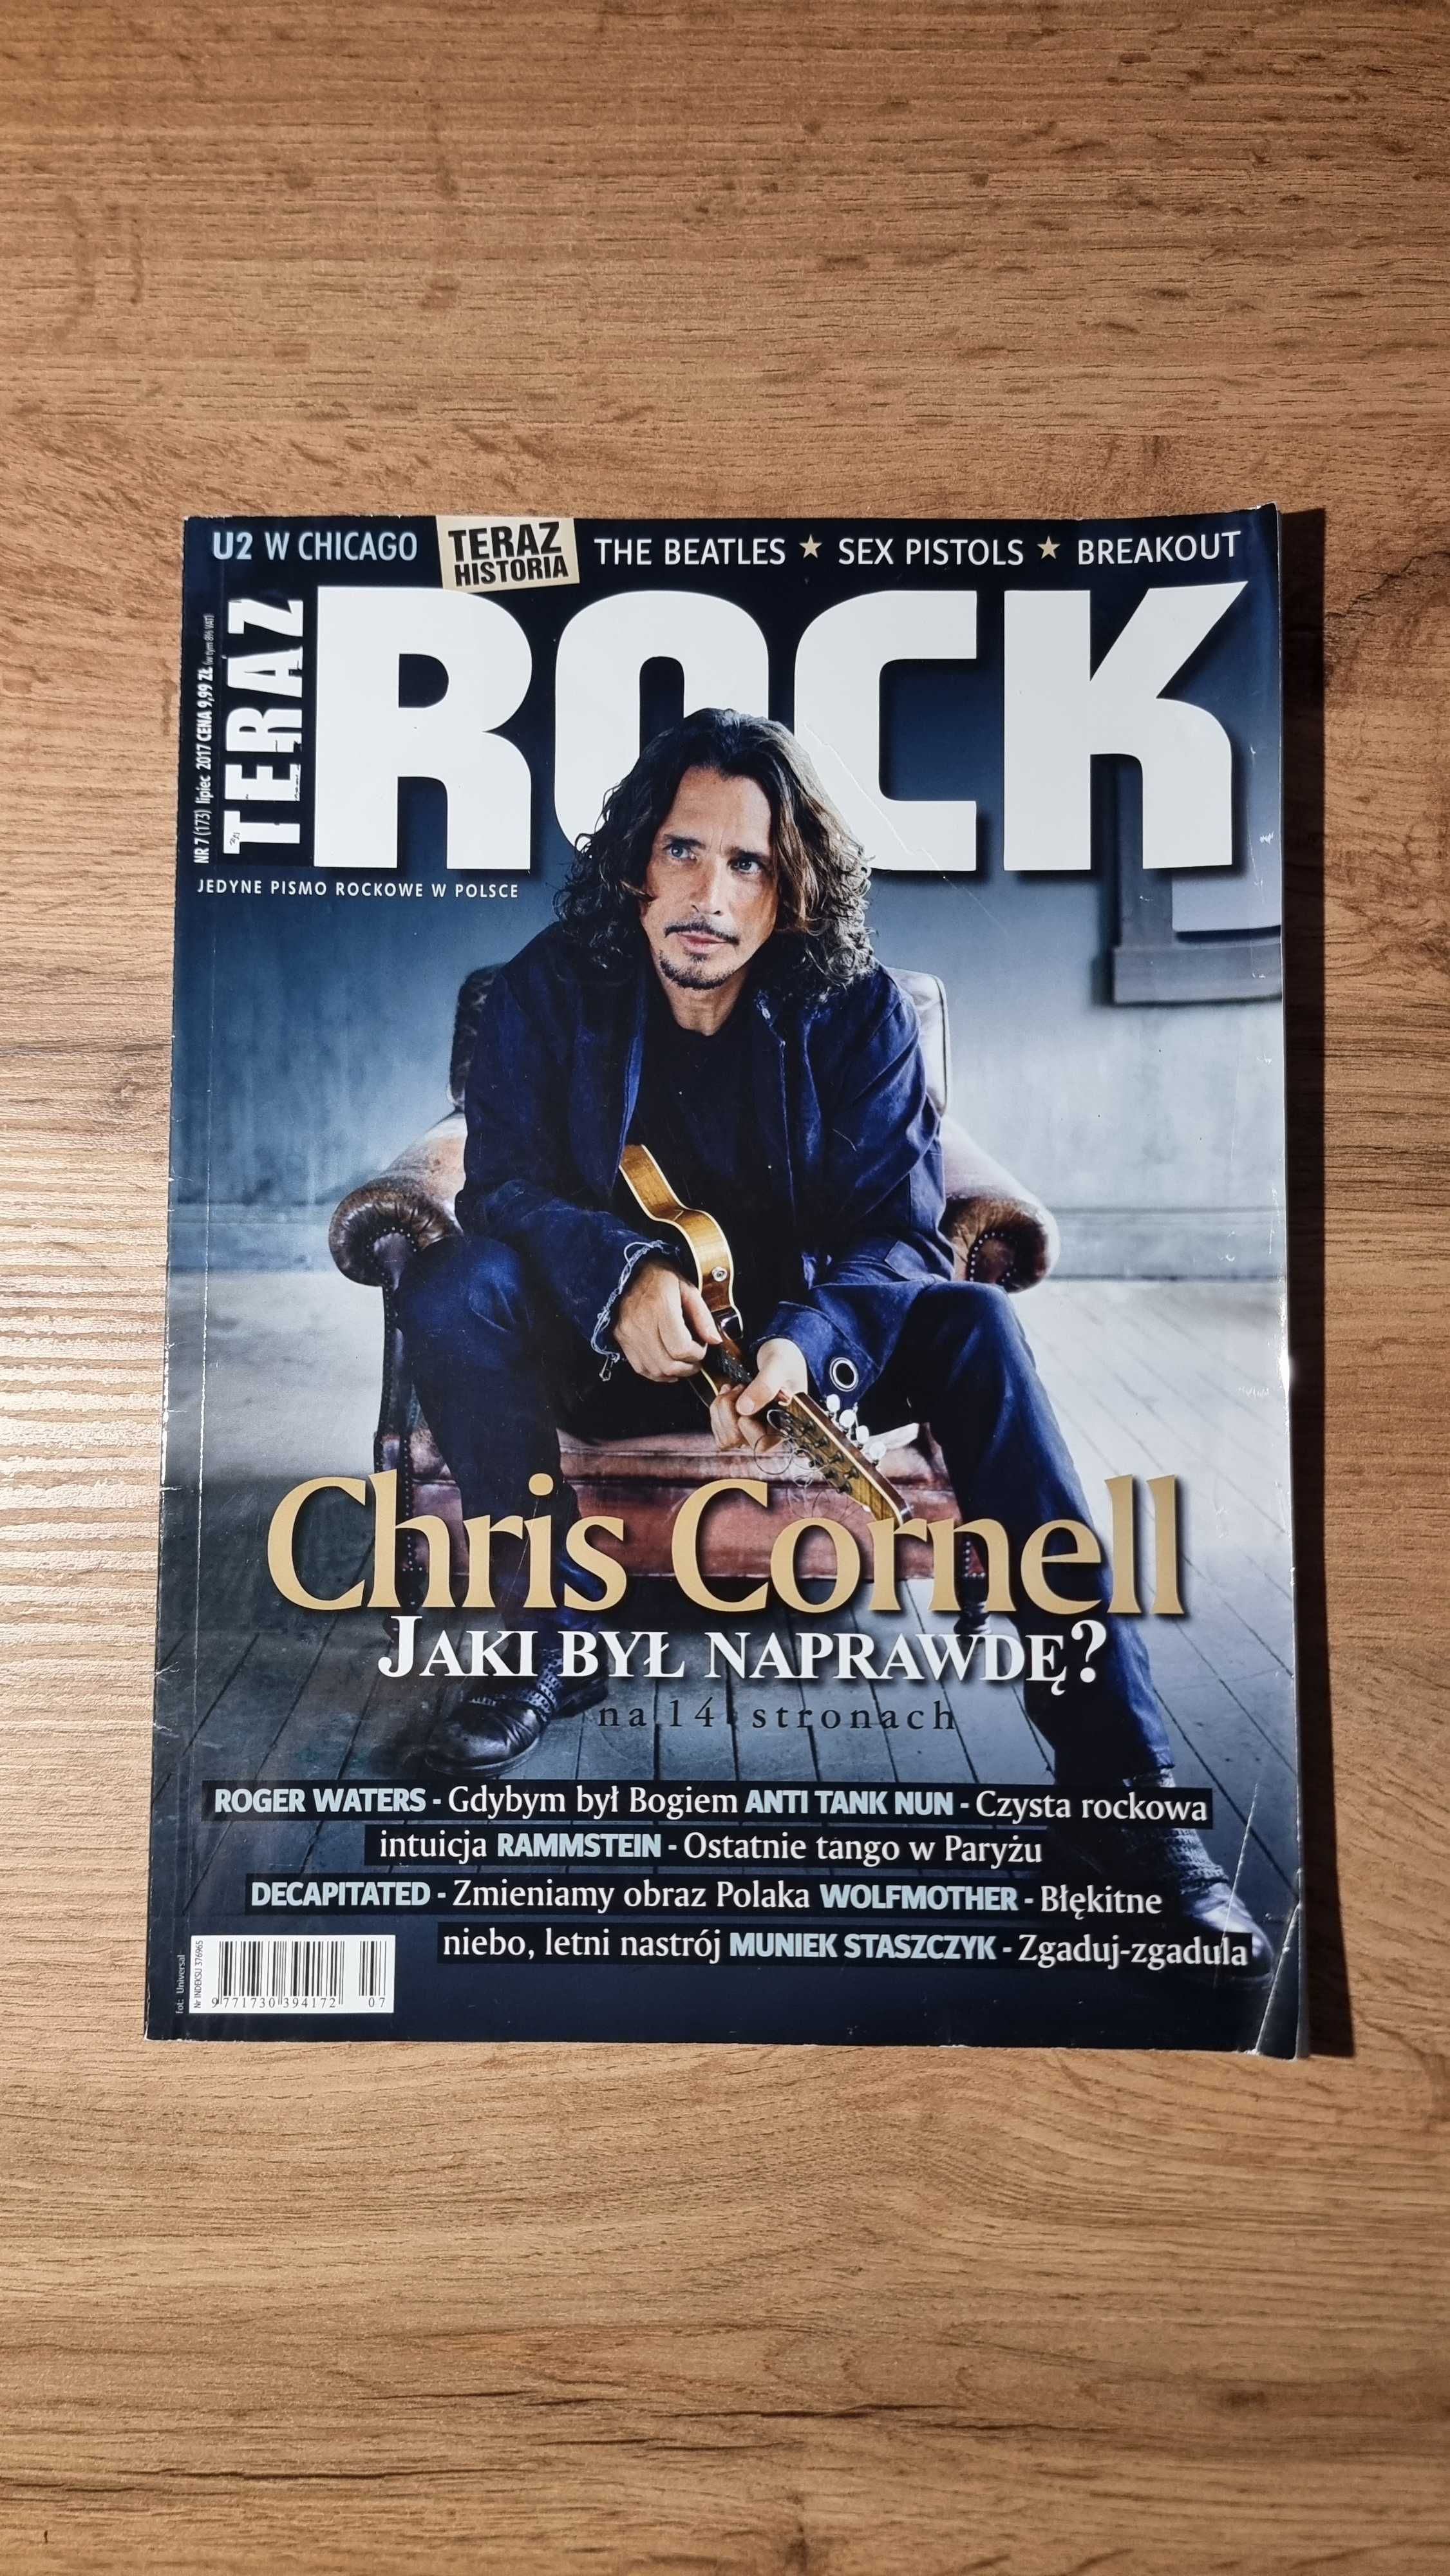 Teraz Rock (173) 7/2017 - Chris Cornell, Rammstein, The Beatles